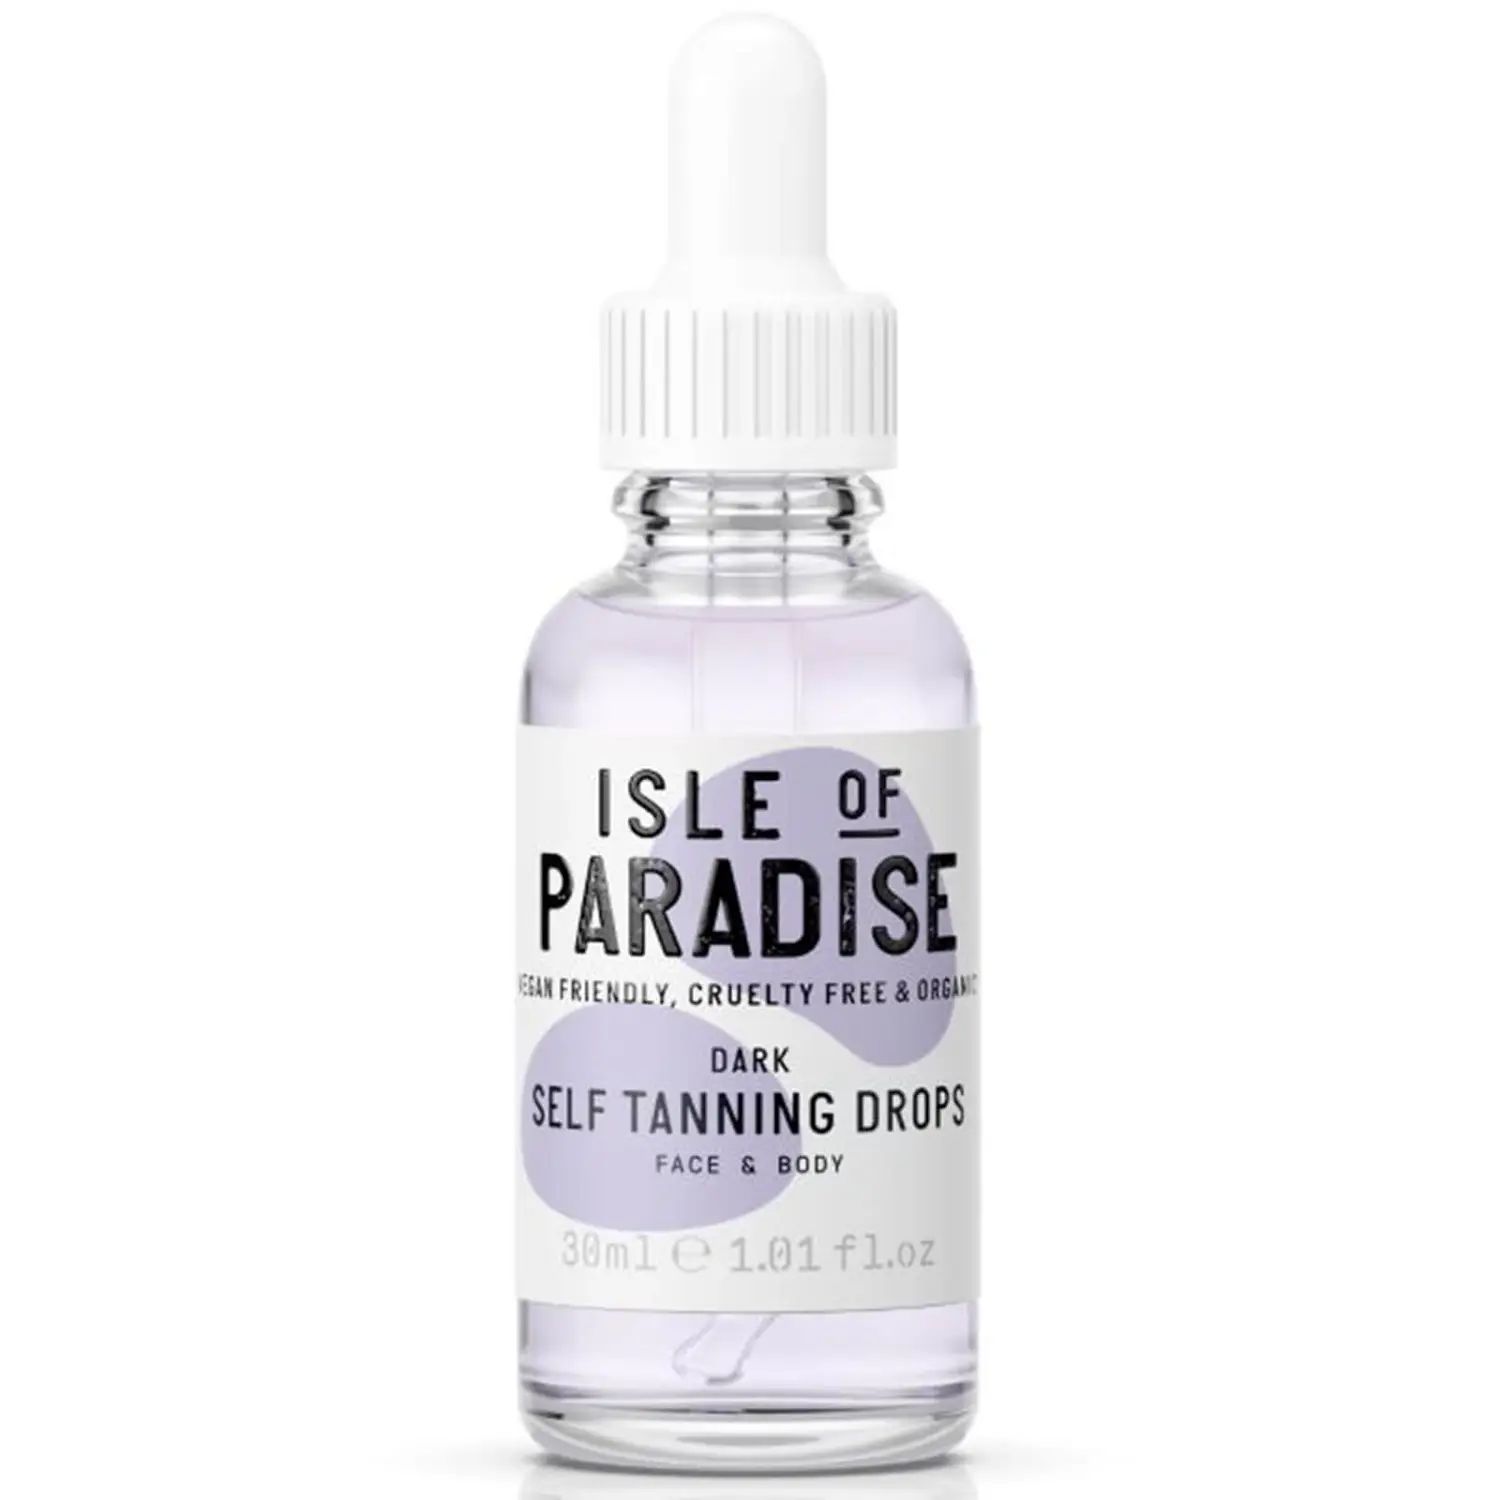 Isle of Paradise Self-Tanning Drops - Dark 30ml | Look Fantastic (UK)